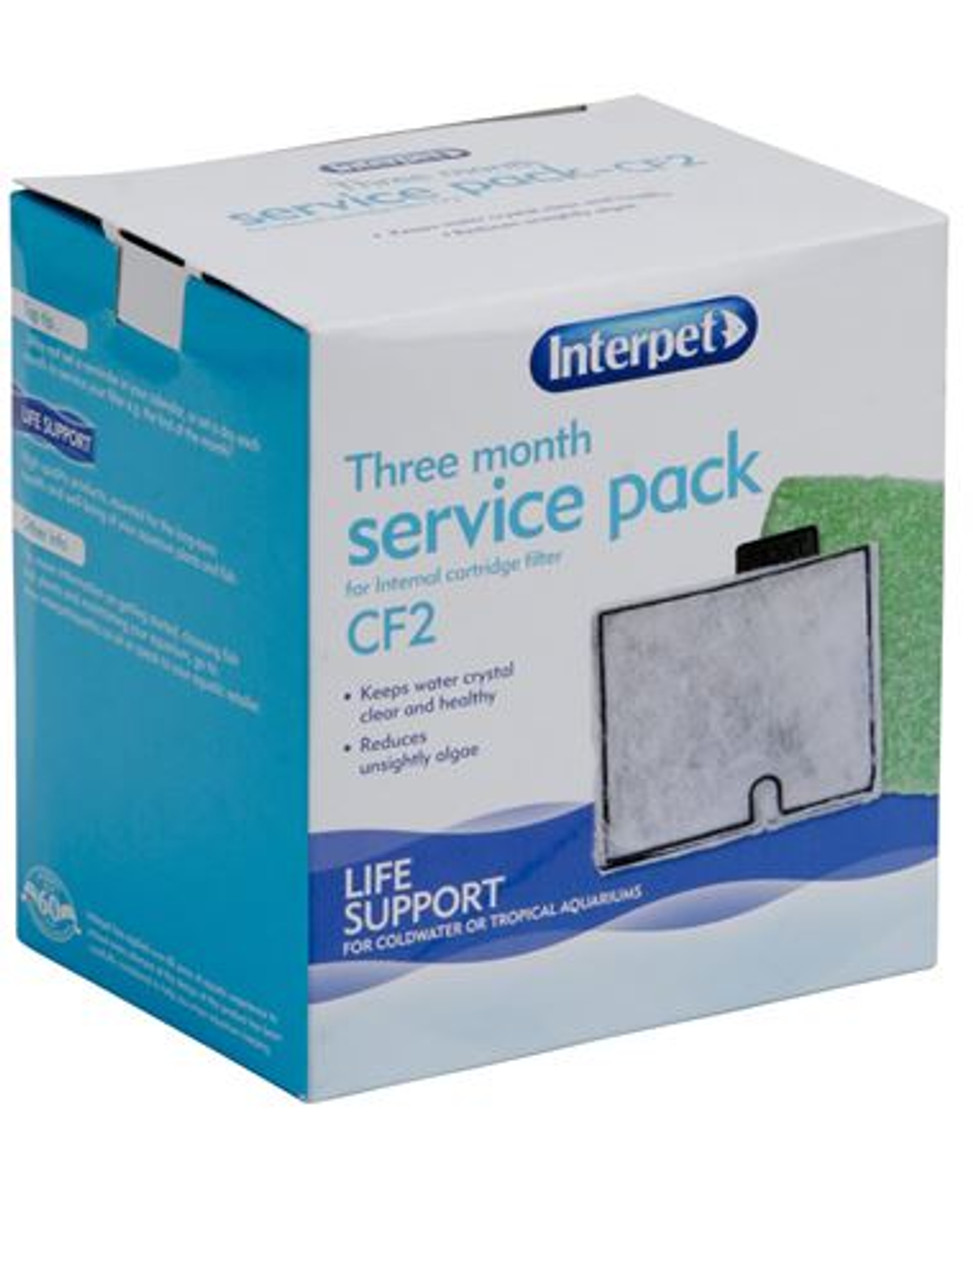 Interpet CF2 Aquarium Service Pack 3 Month Filter Foam Media Cartridge